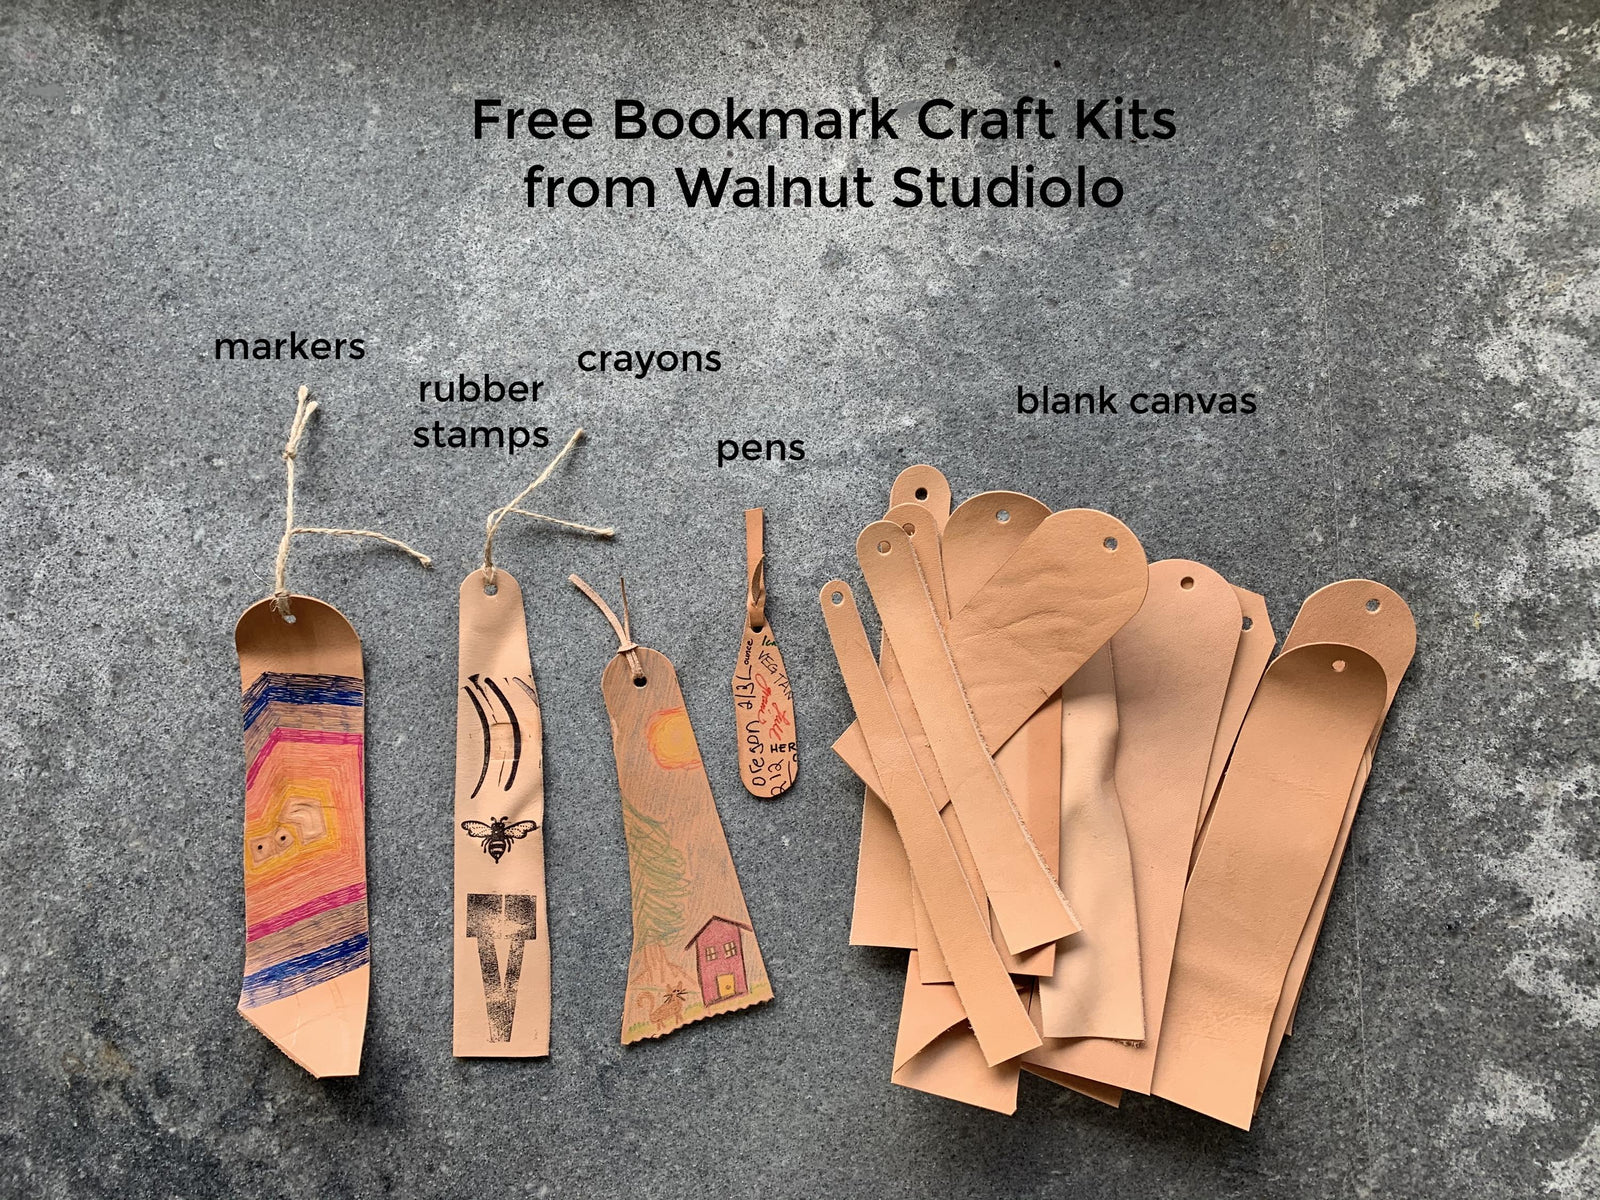 Free craft kits